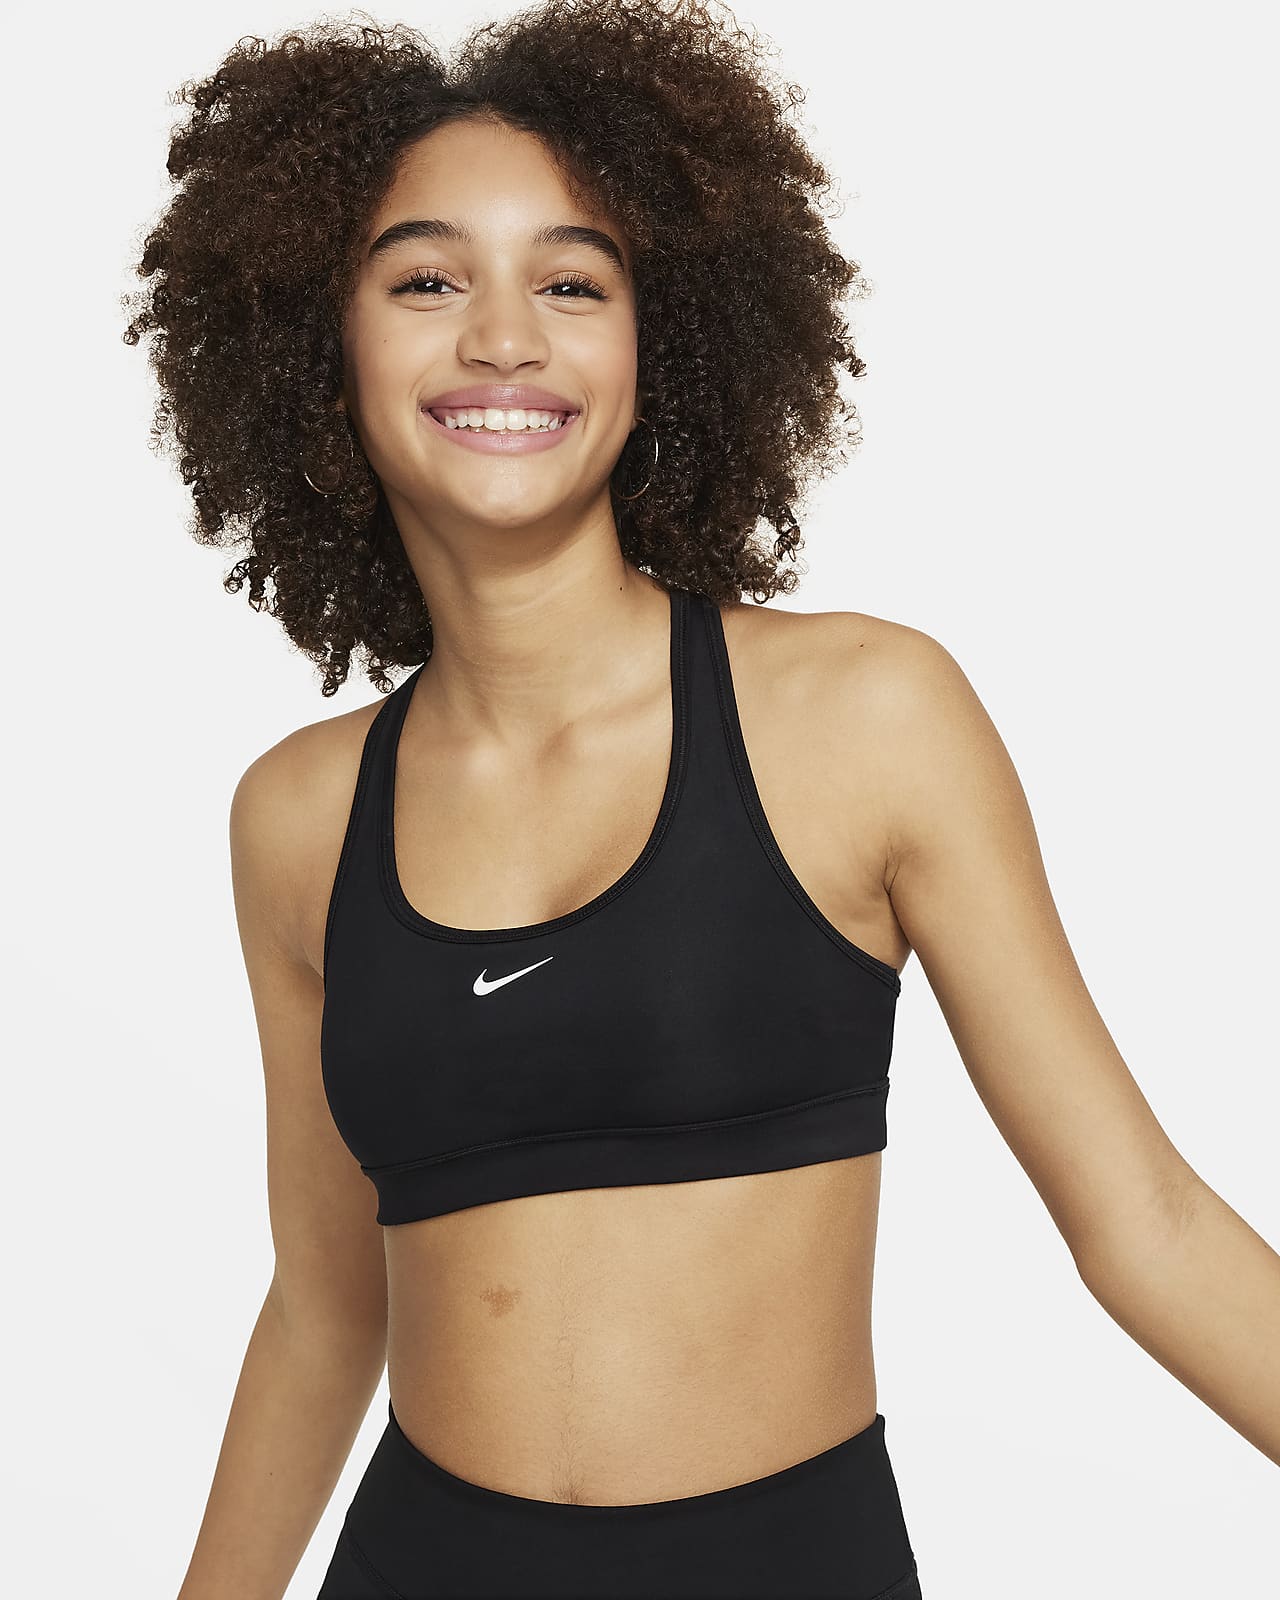 Nike Girls' Pro Sports Bra